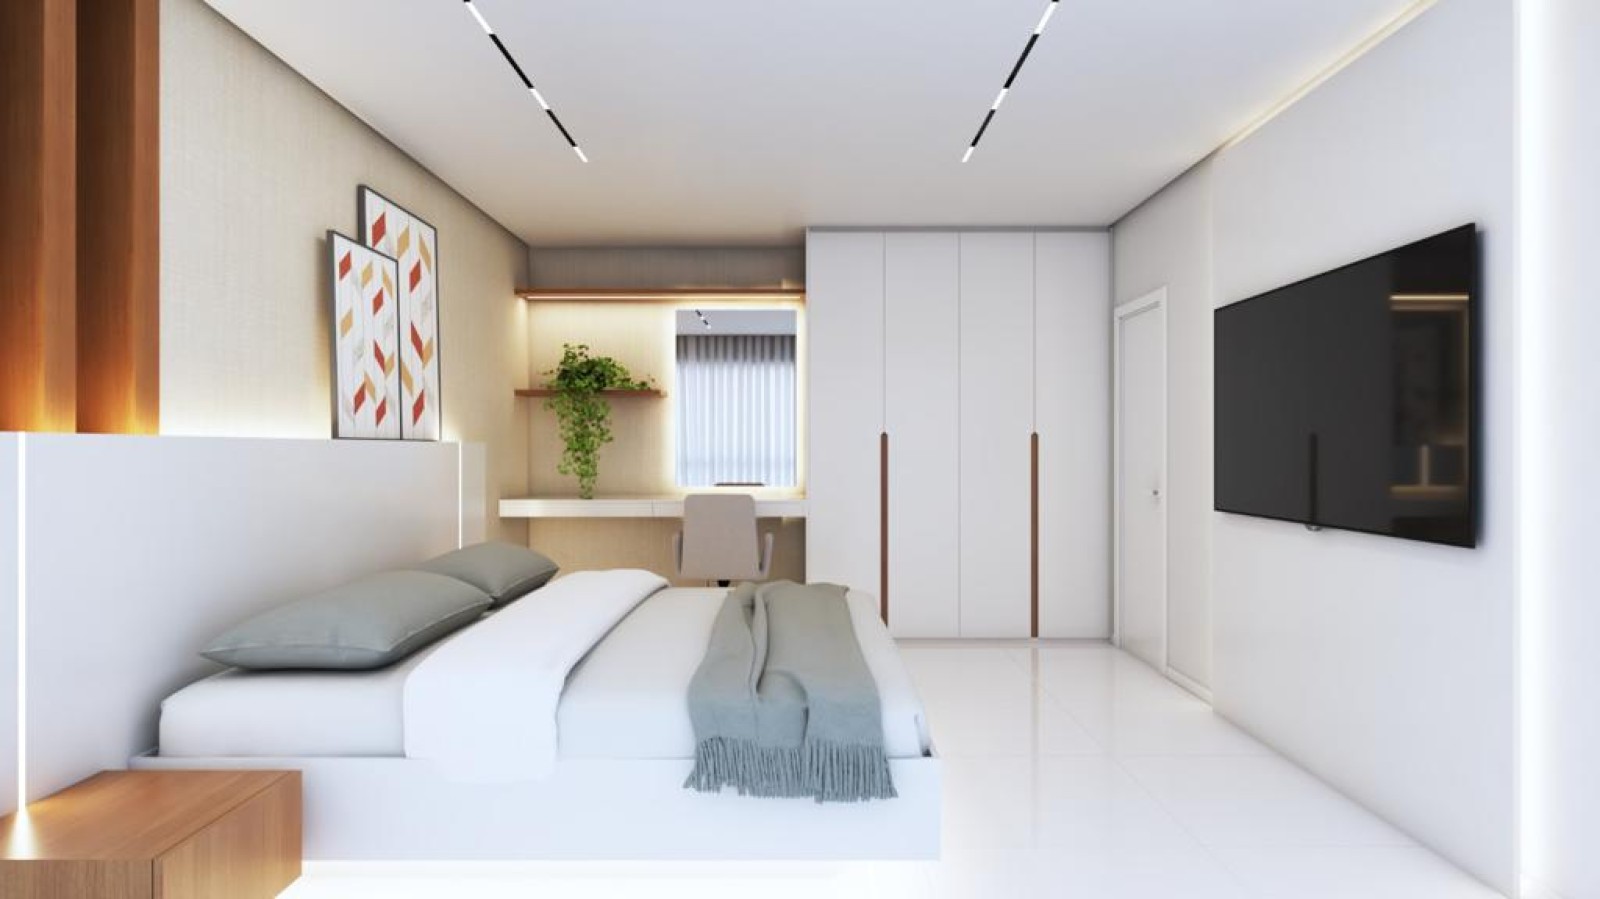 3 Bedroom Luxury House, for sale, in Portimão, Algarve_224852